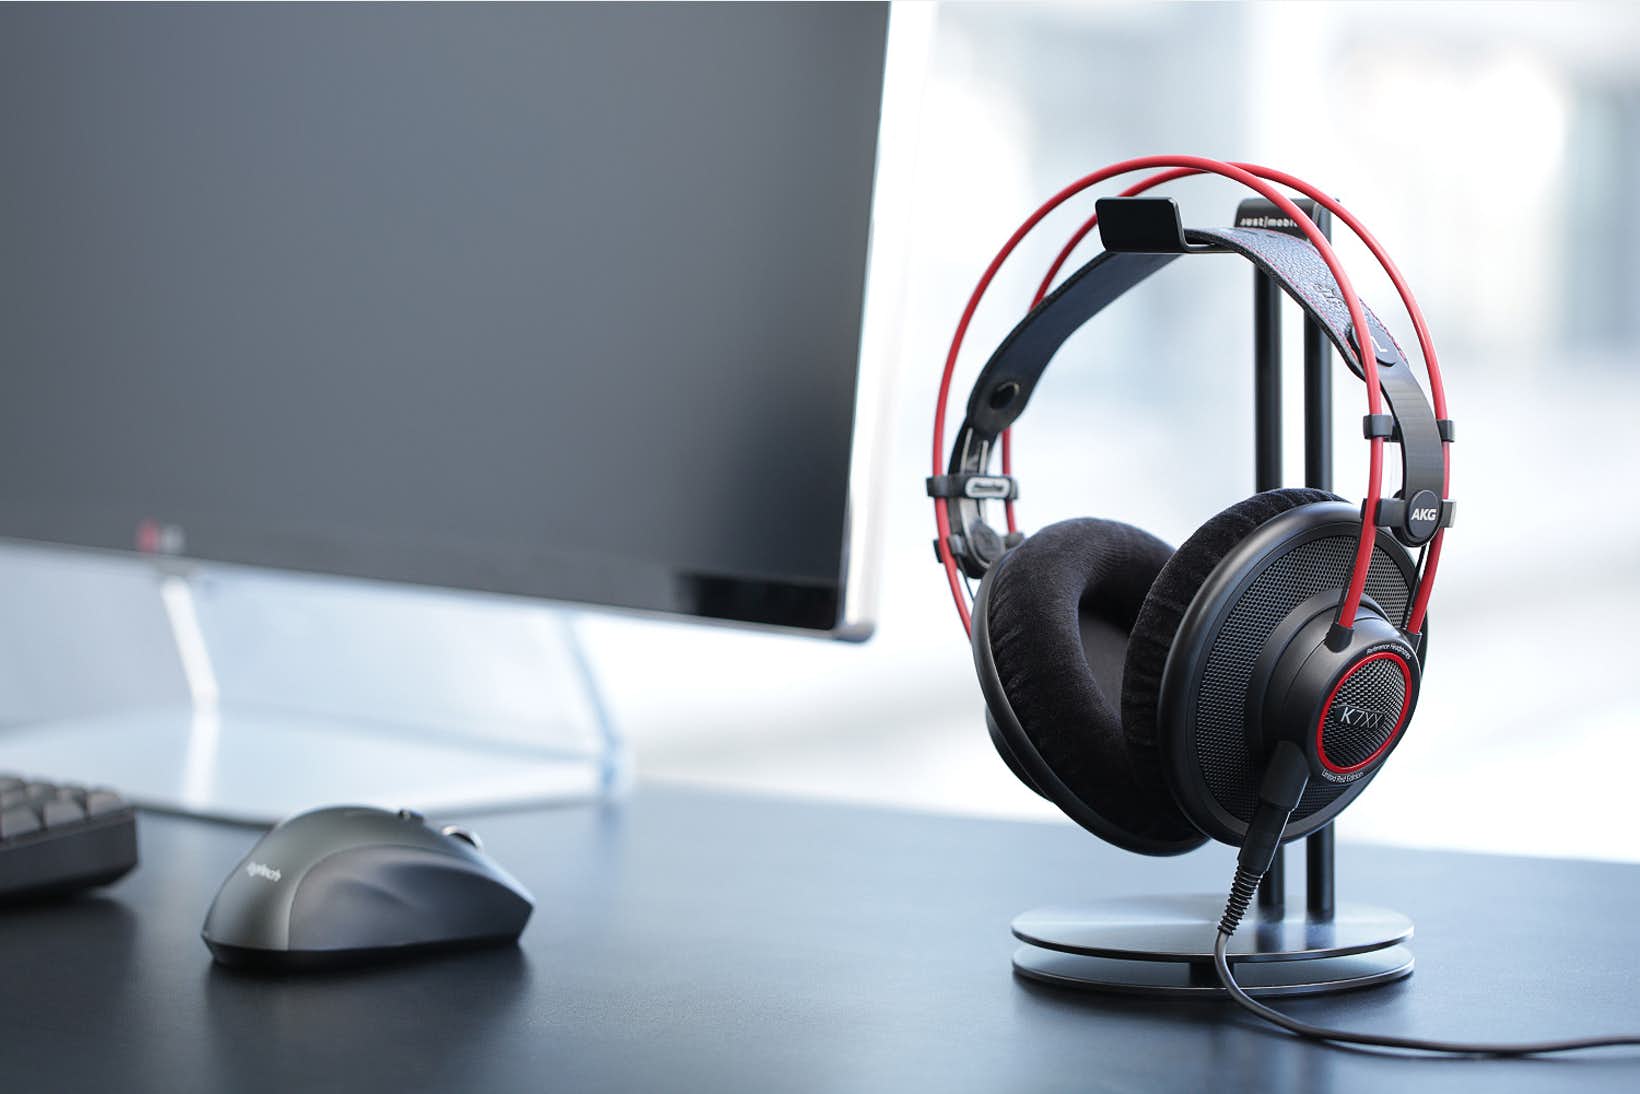 The best headphones - MASSDROP X AKG K7XX RED EDITION